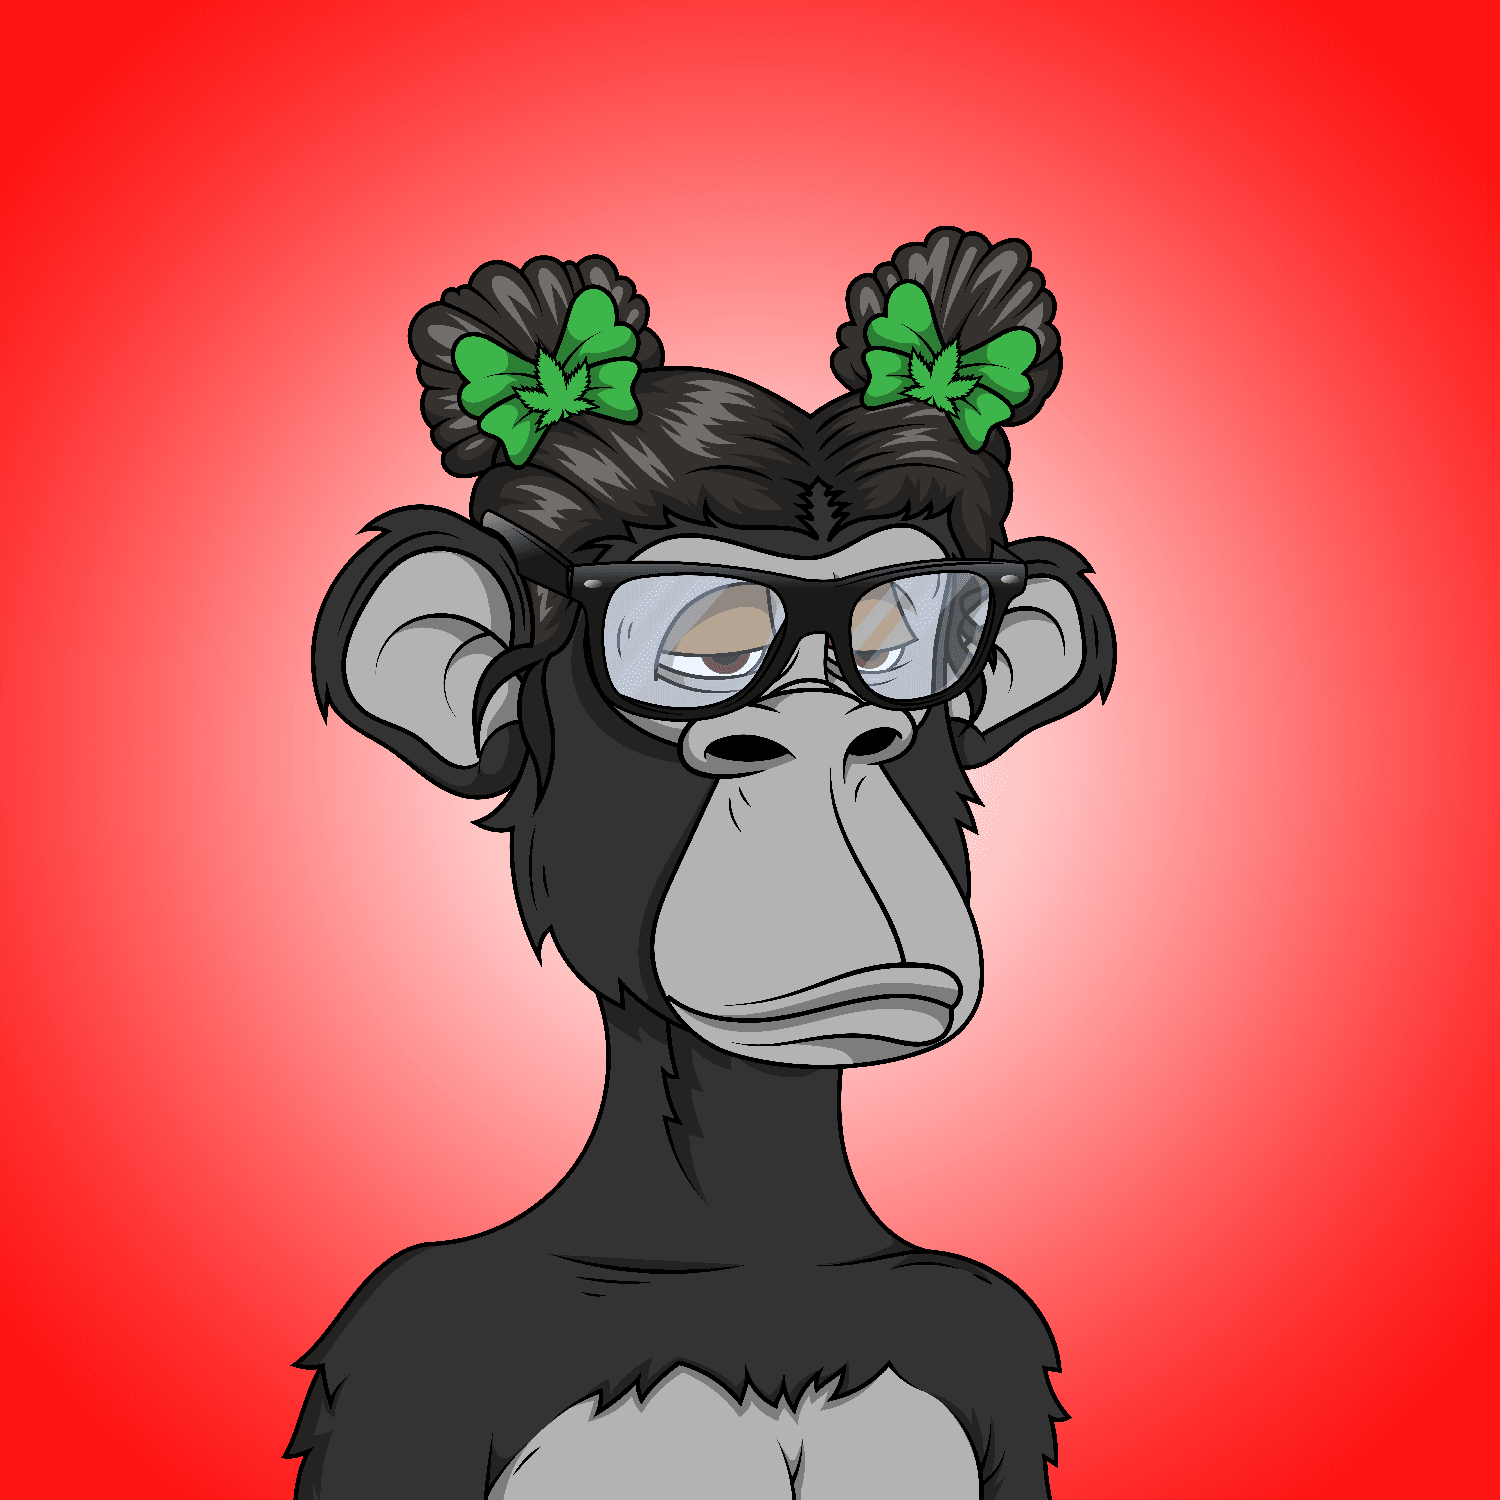 Stoned Ape #1155